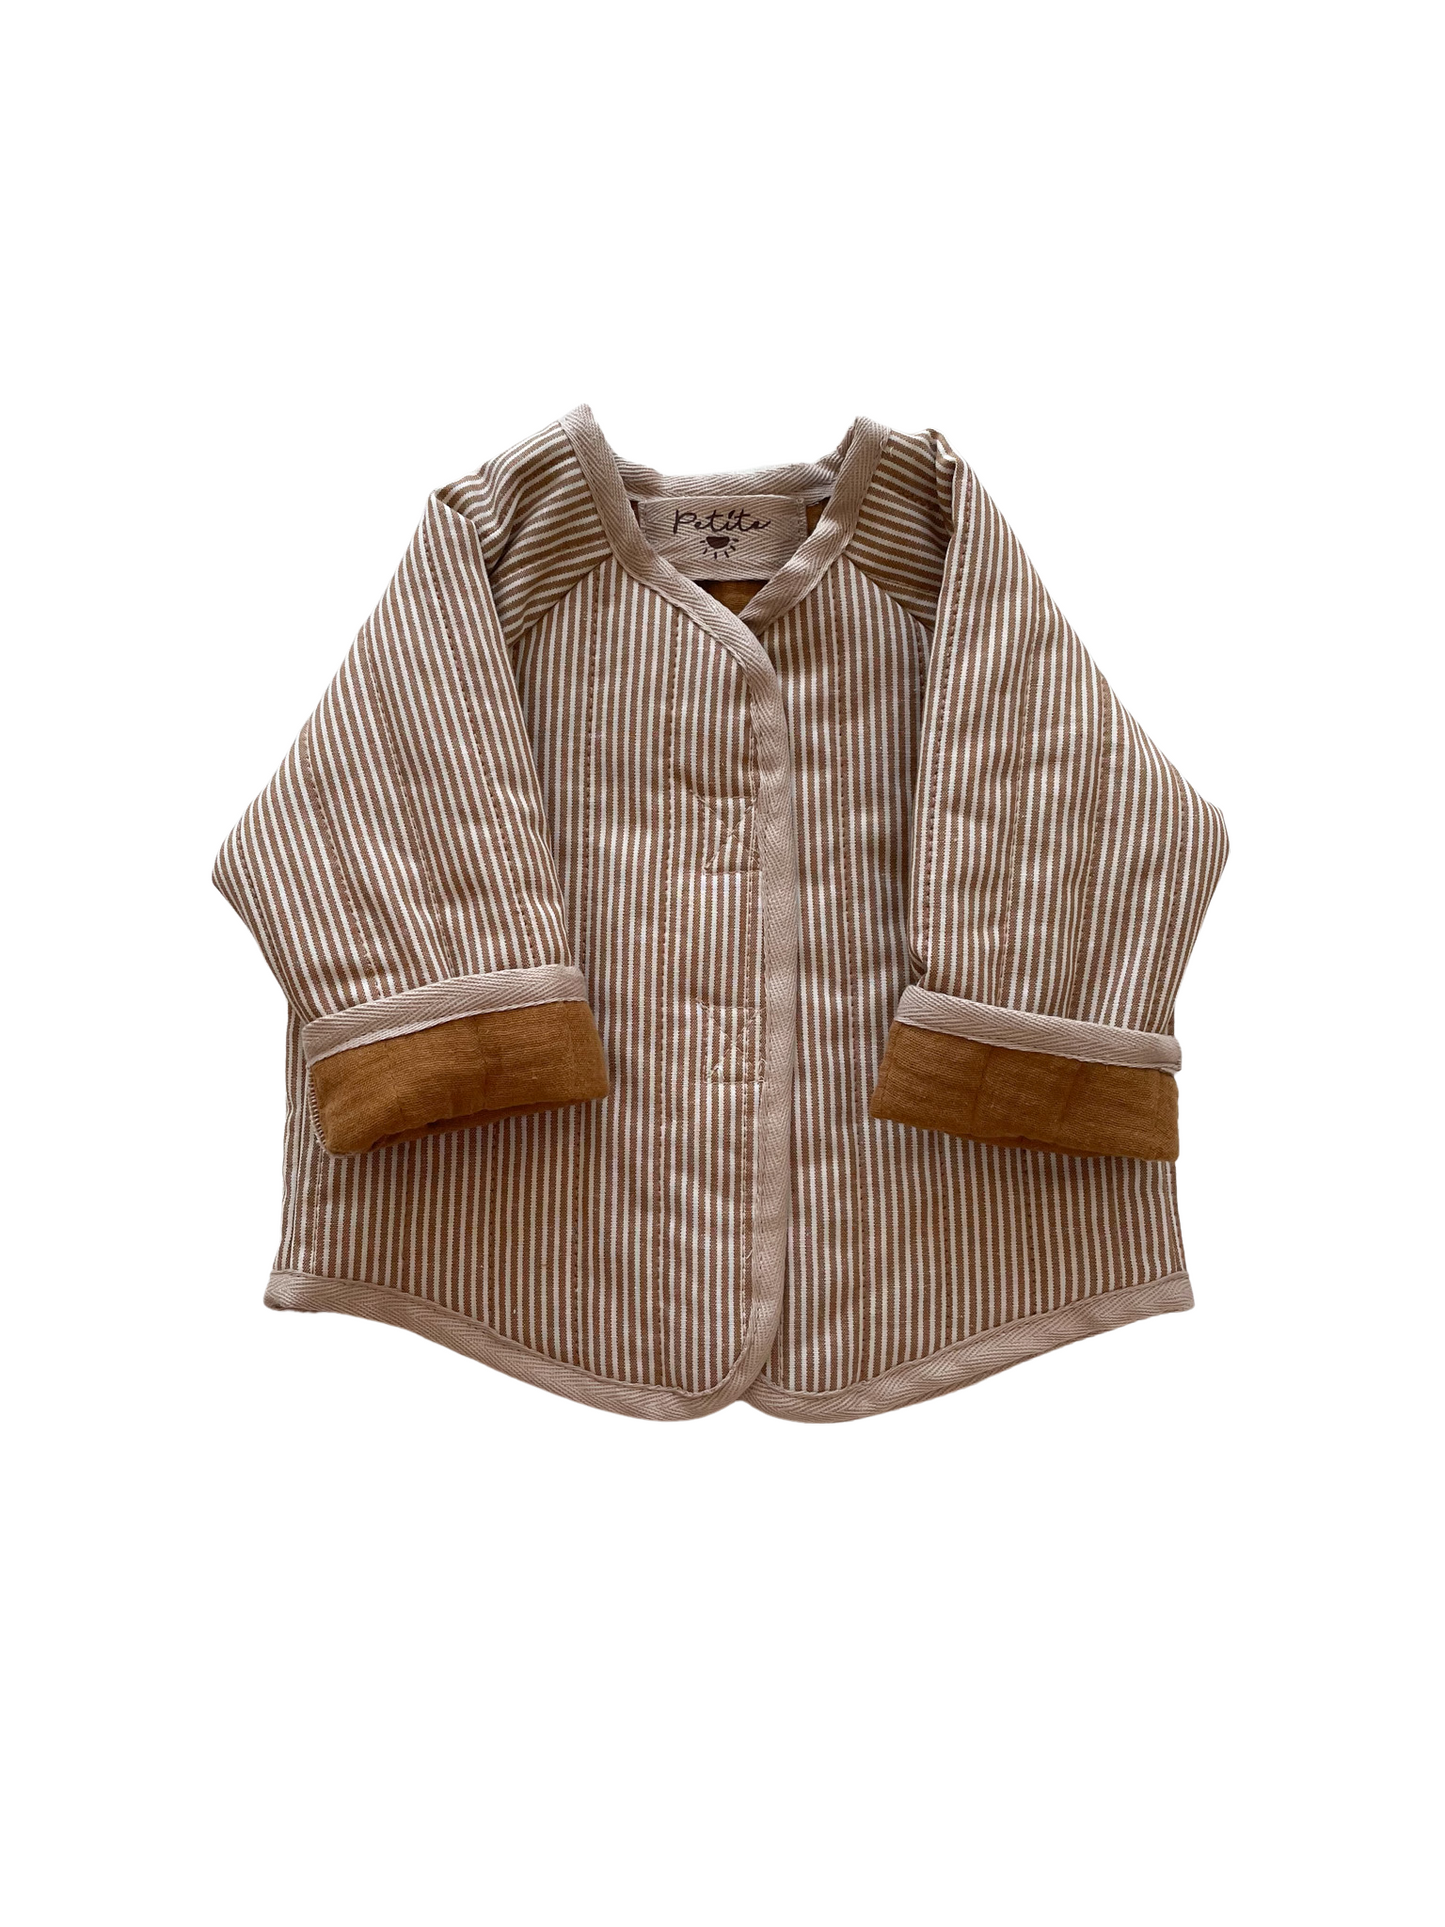 Baby & toddler teddy jacket / stripes - caramel